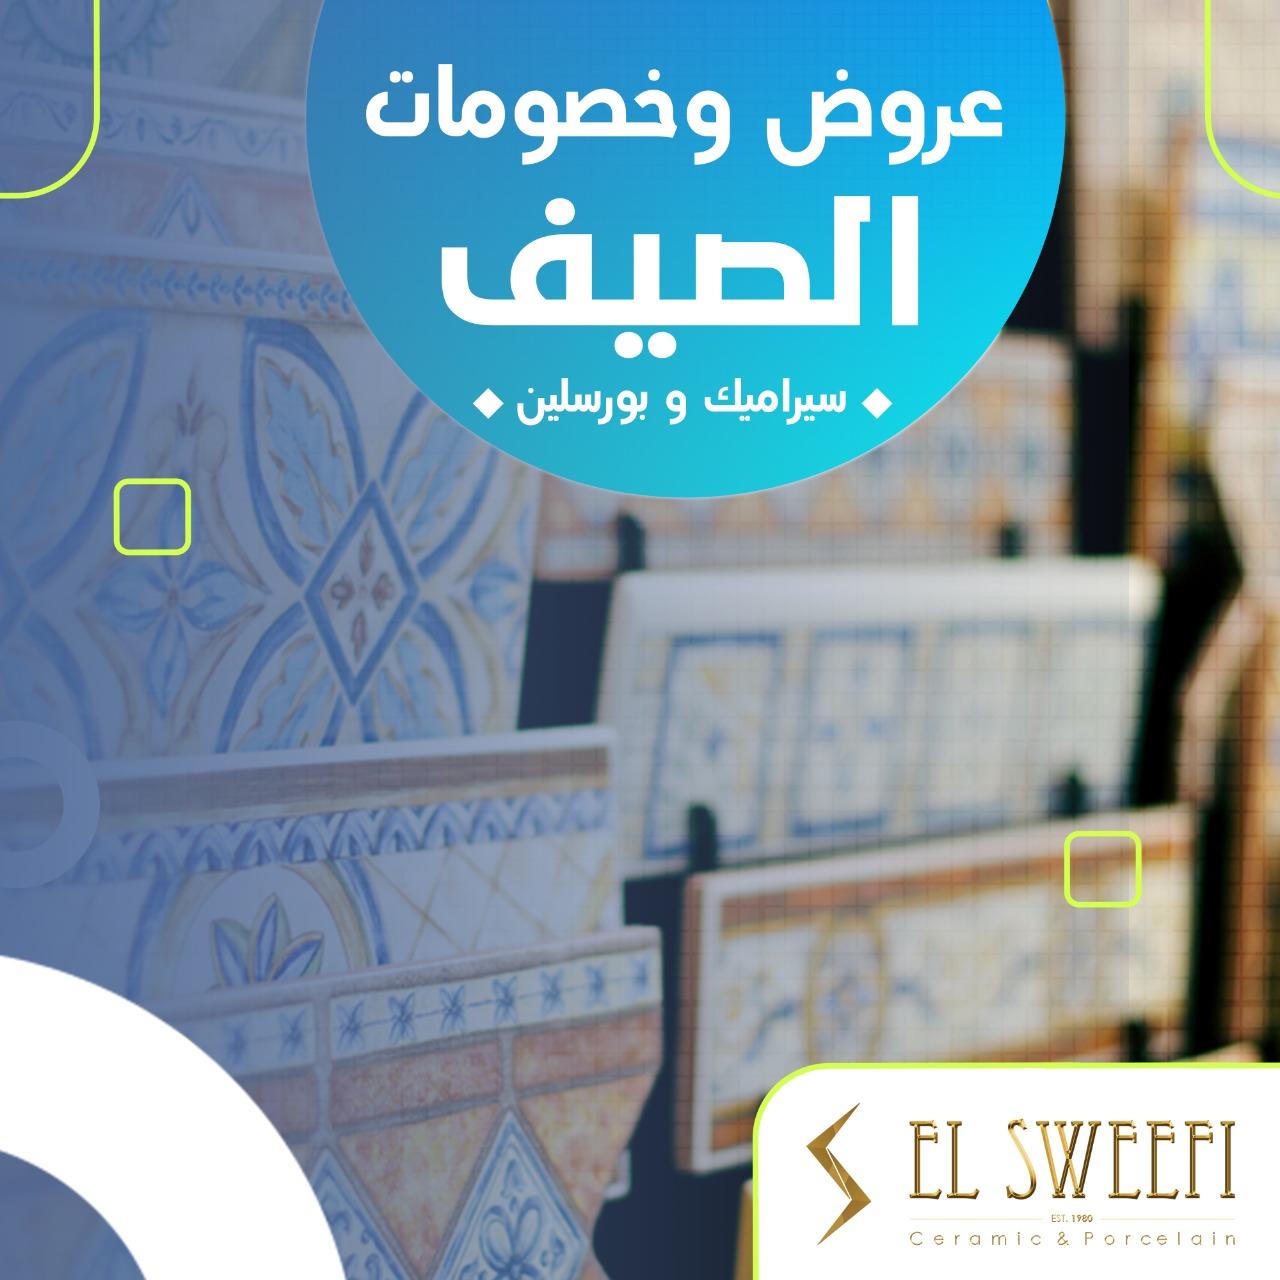 social media project elsweefi 11